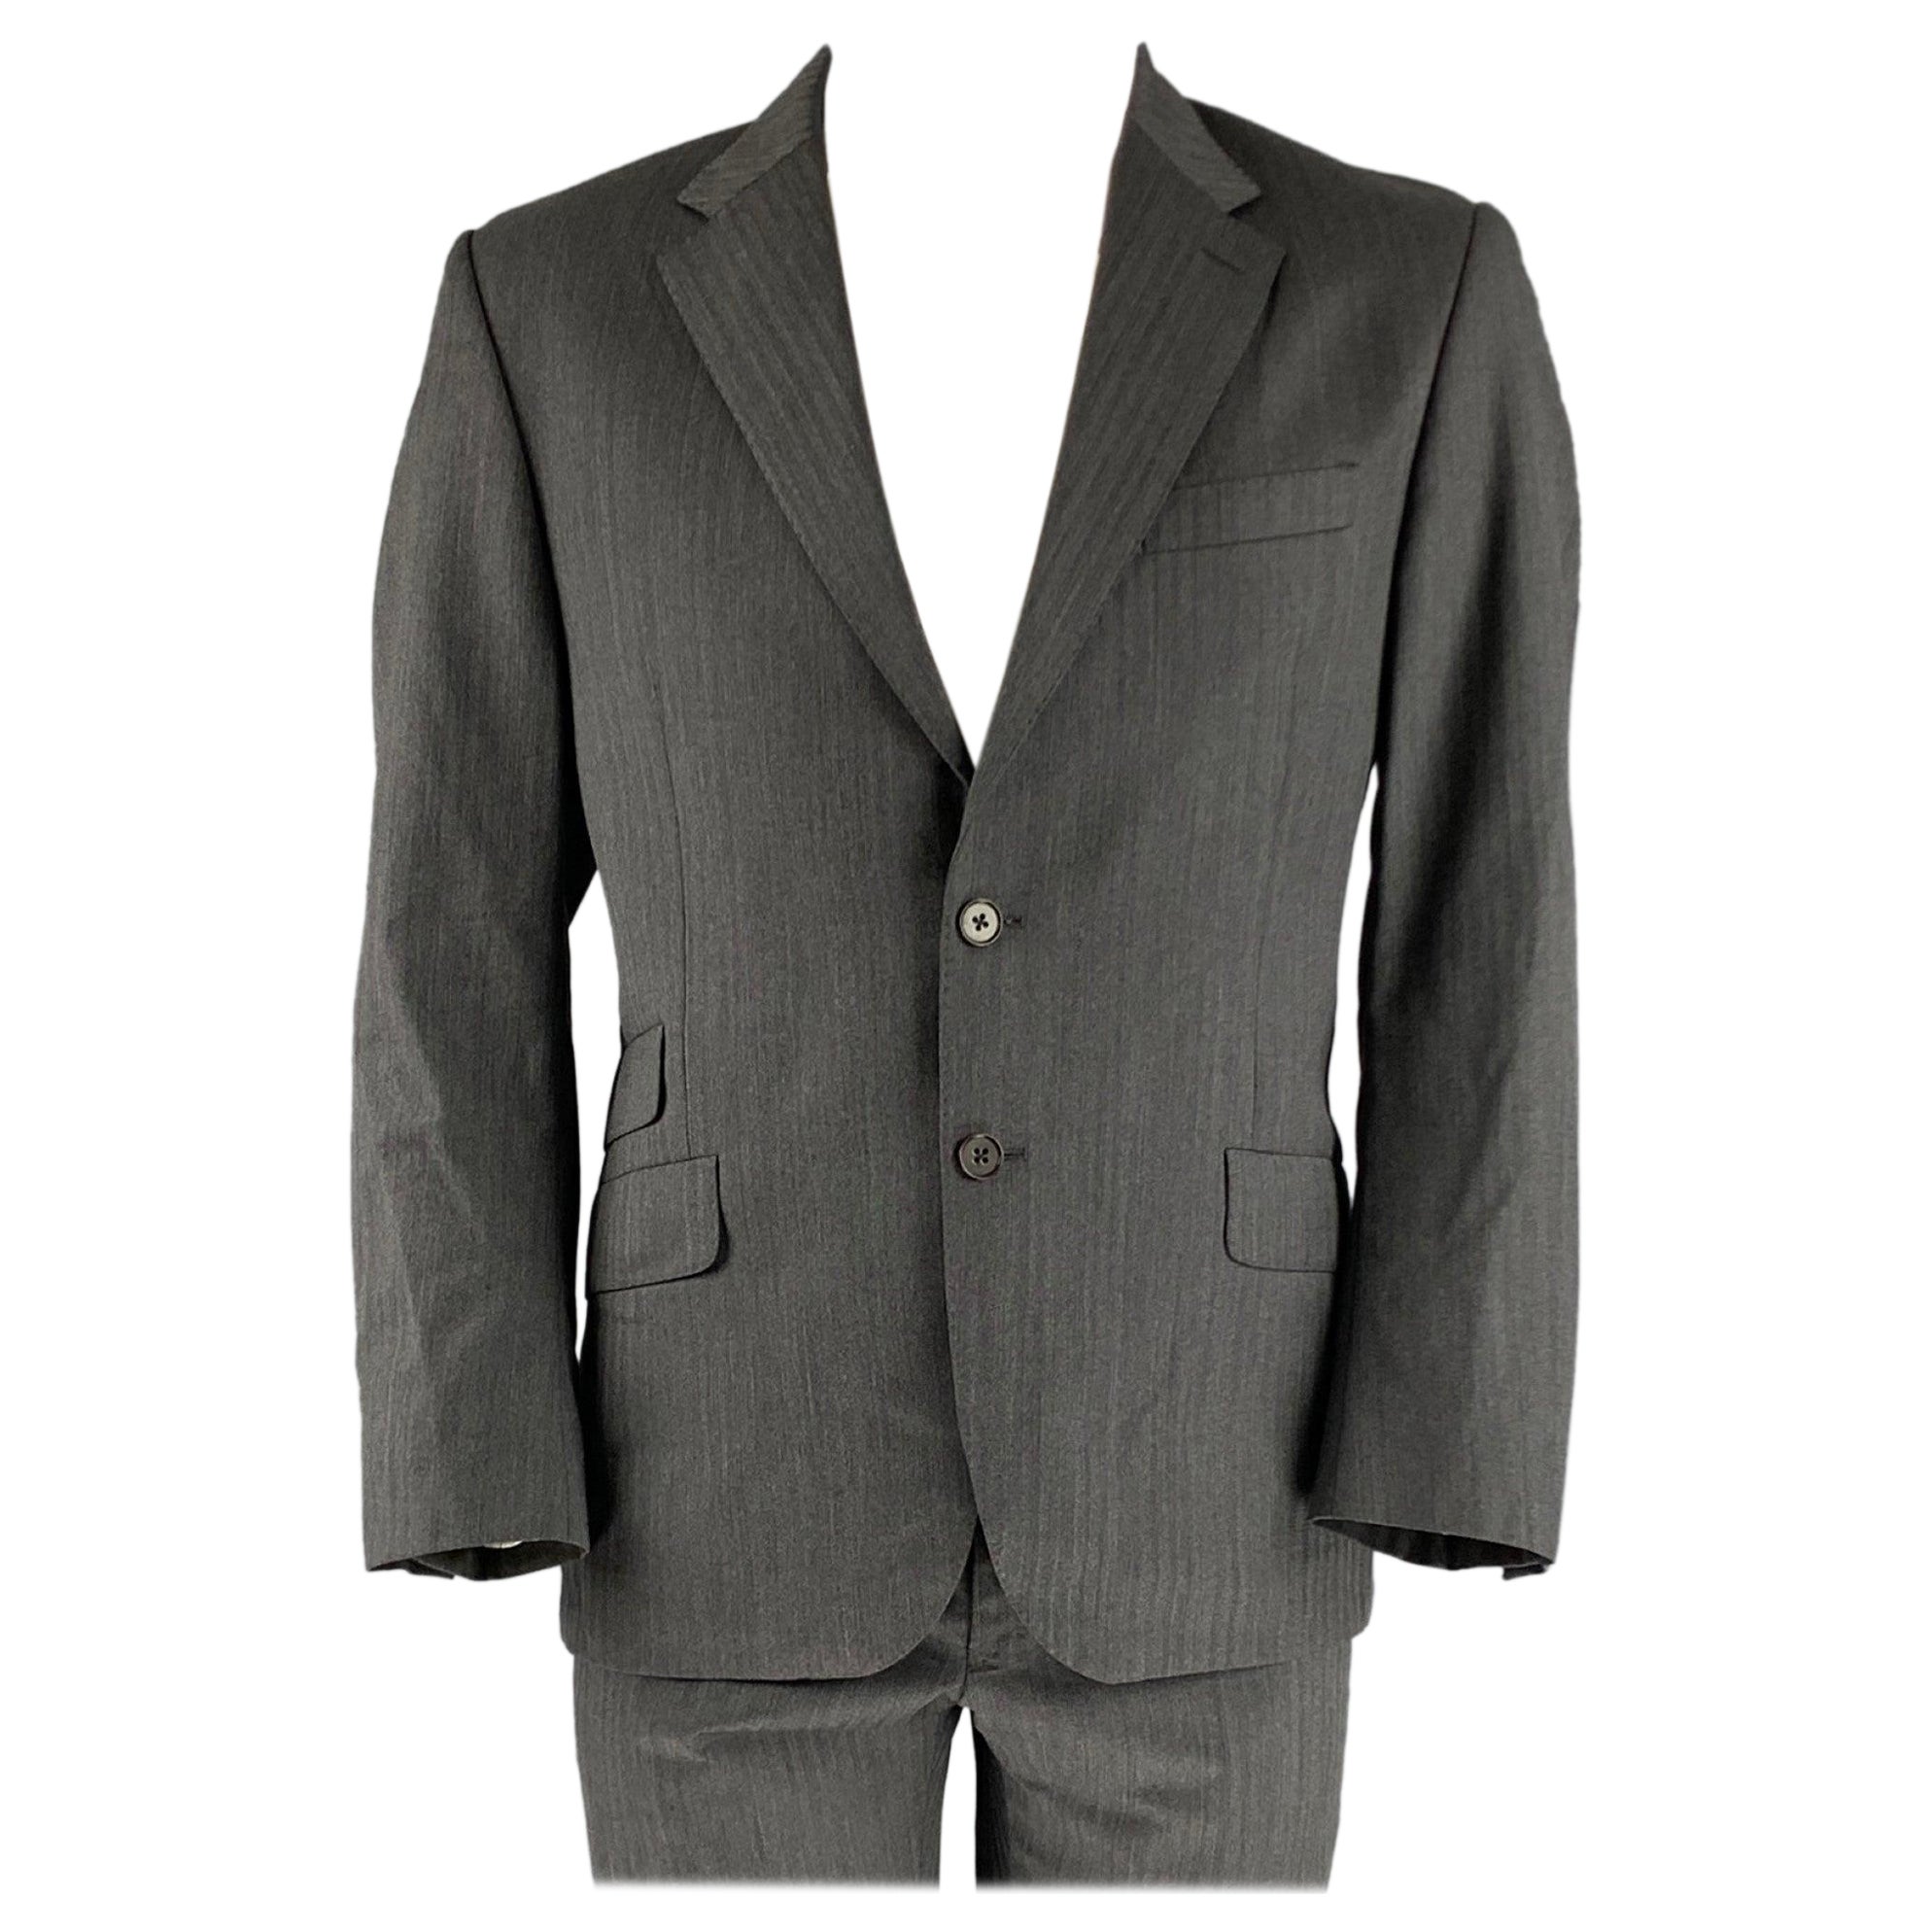 PAUL SMITH Size 42 Charcoal Herringbone Wool Notch Lapel Suit For Sale